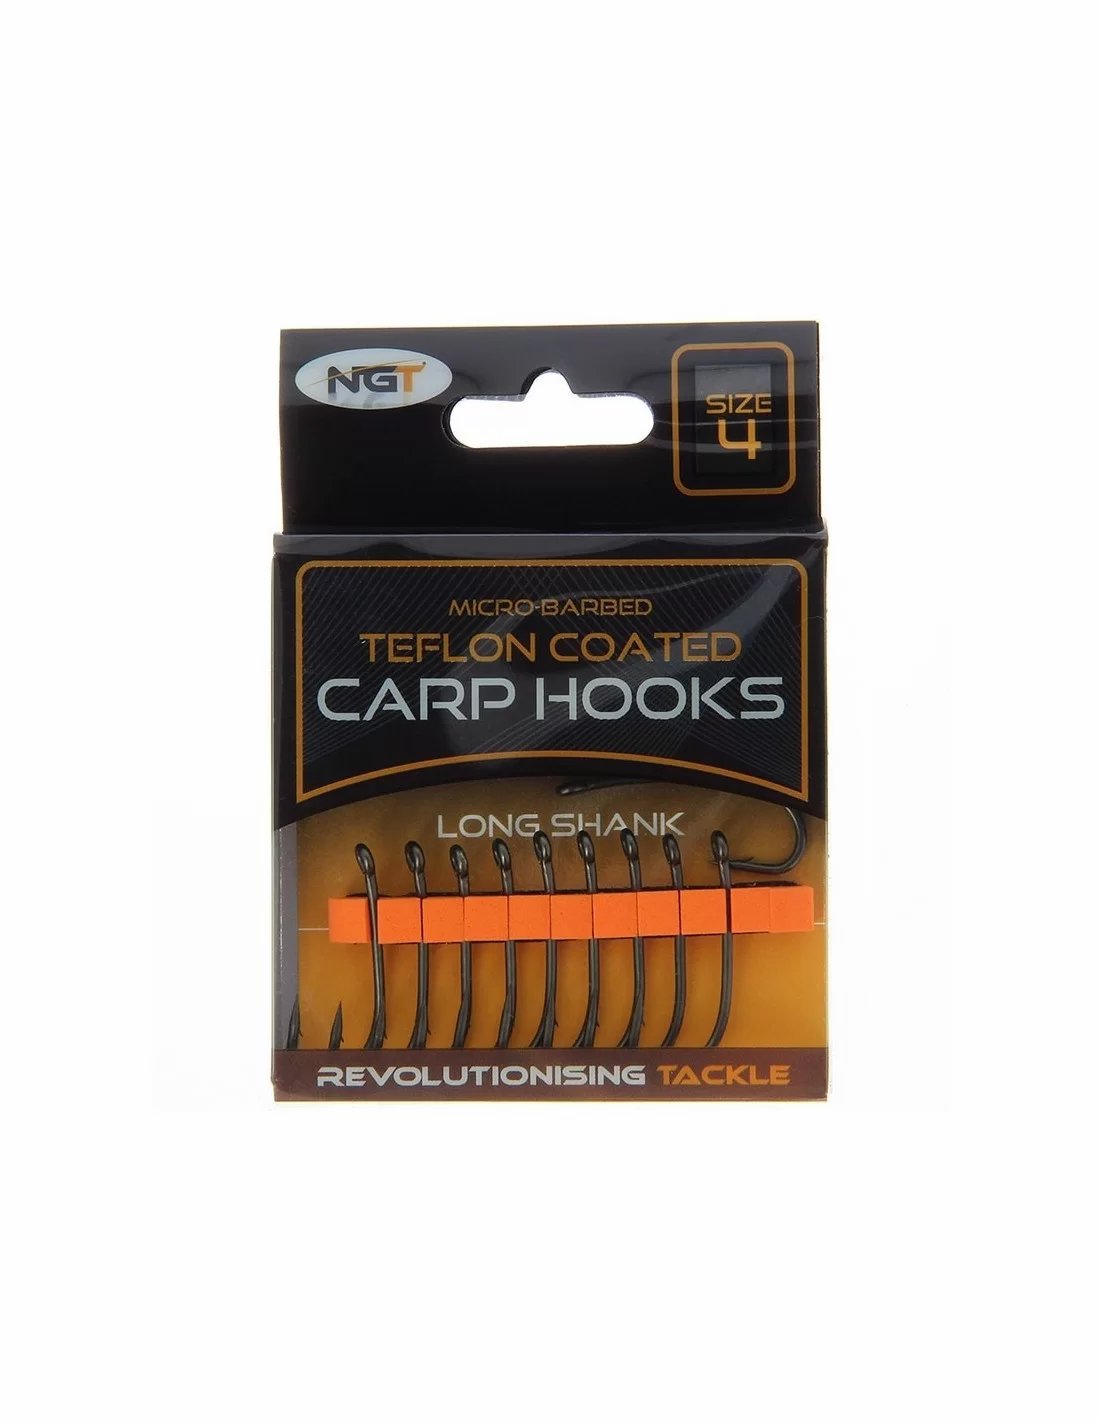 NGT Long Shank Carp Hooks куки